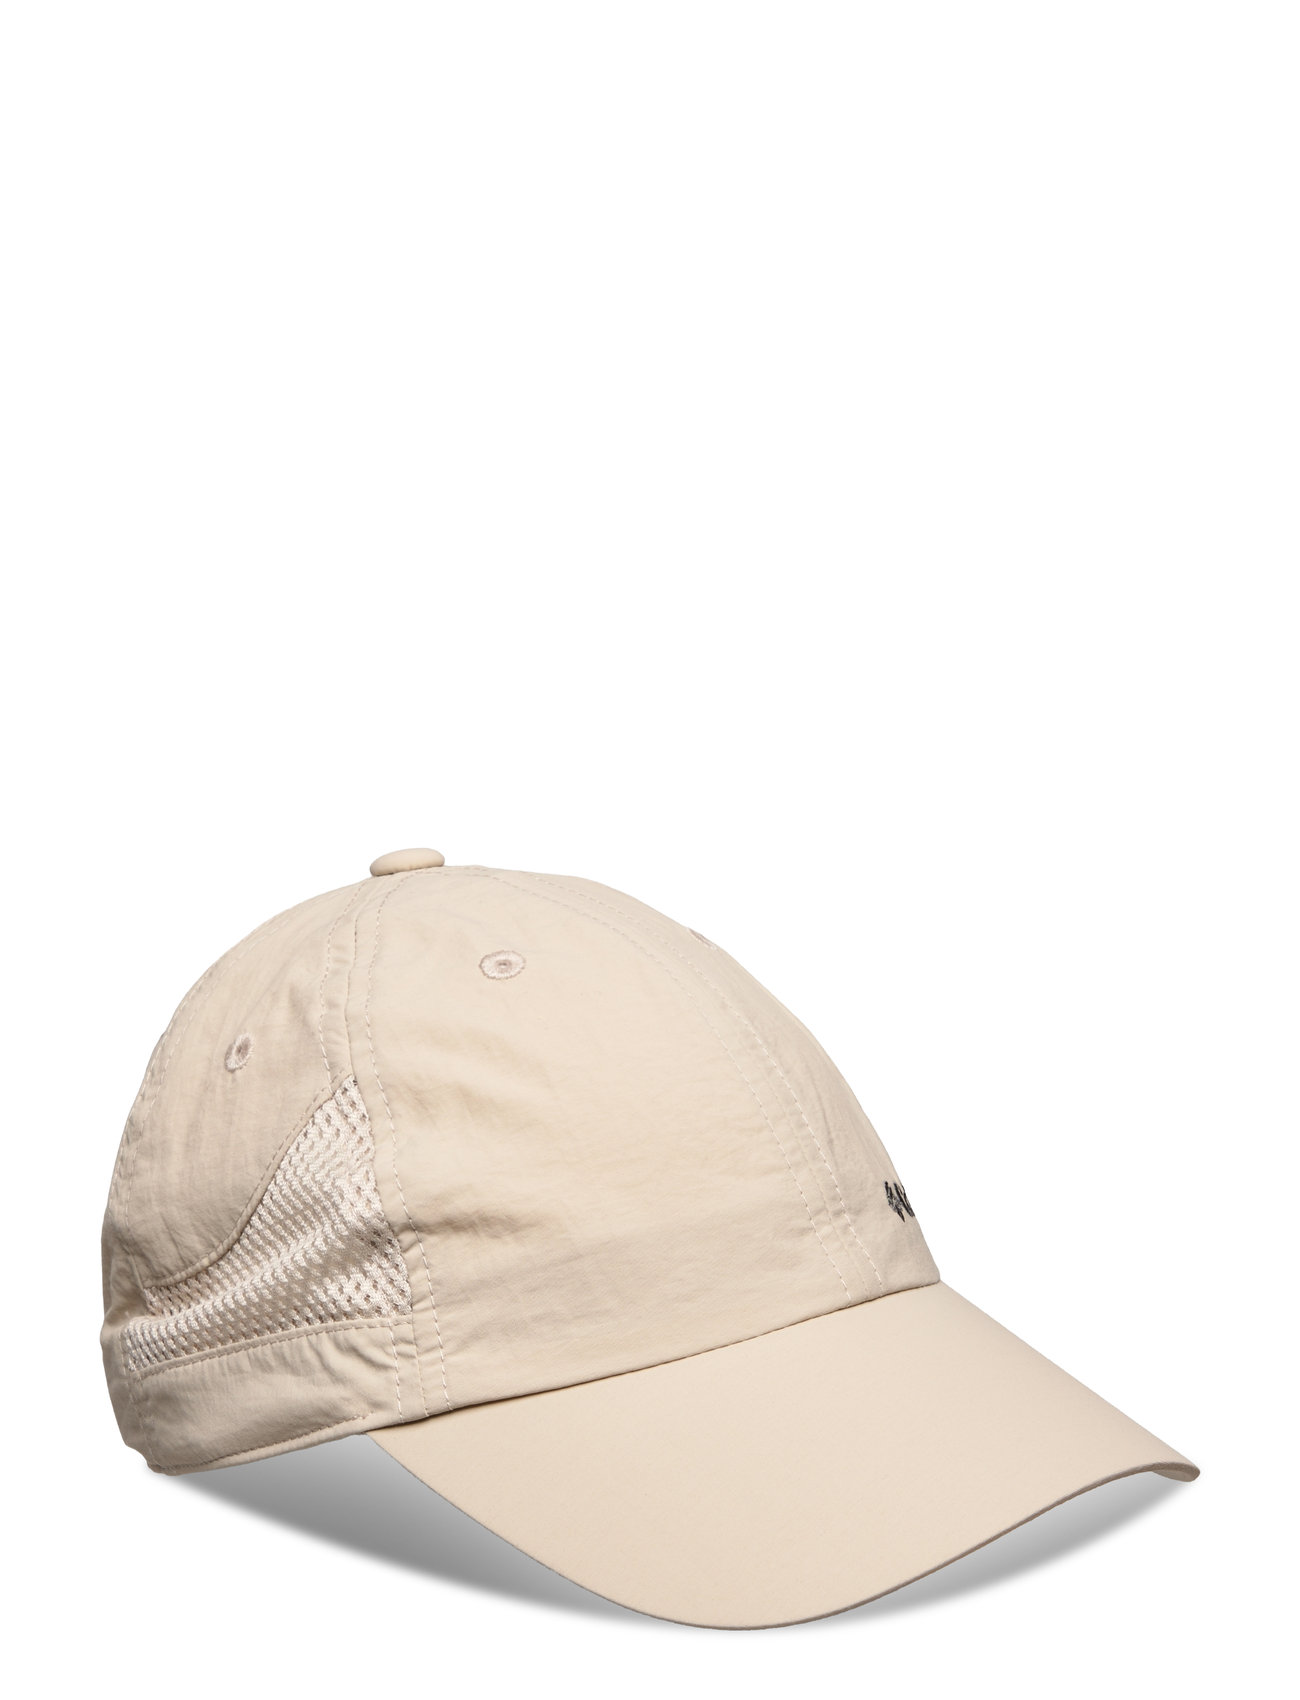 Columbia Sportswear Tech Shade Hat - Caps